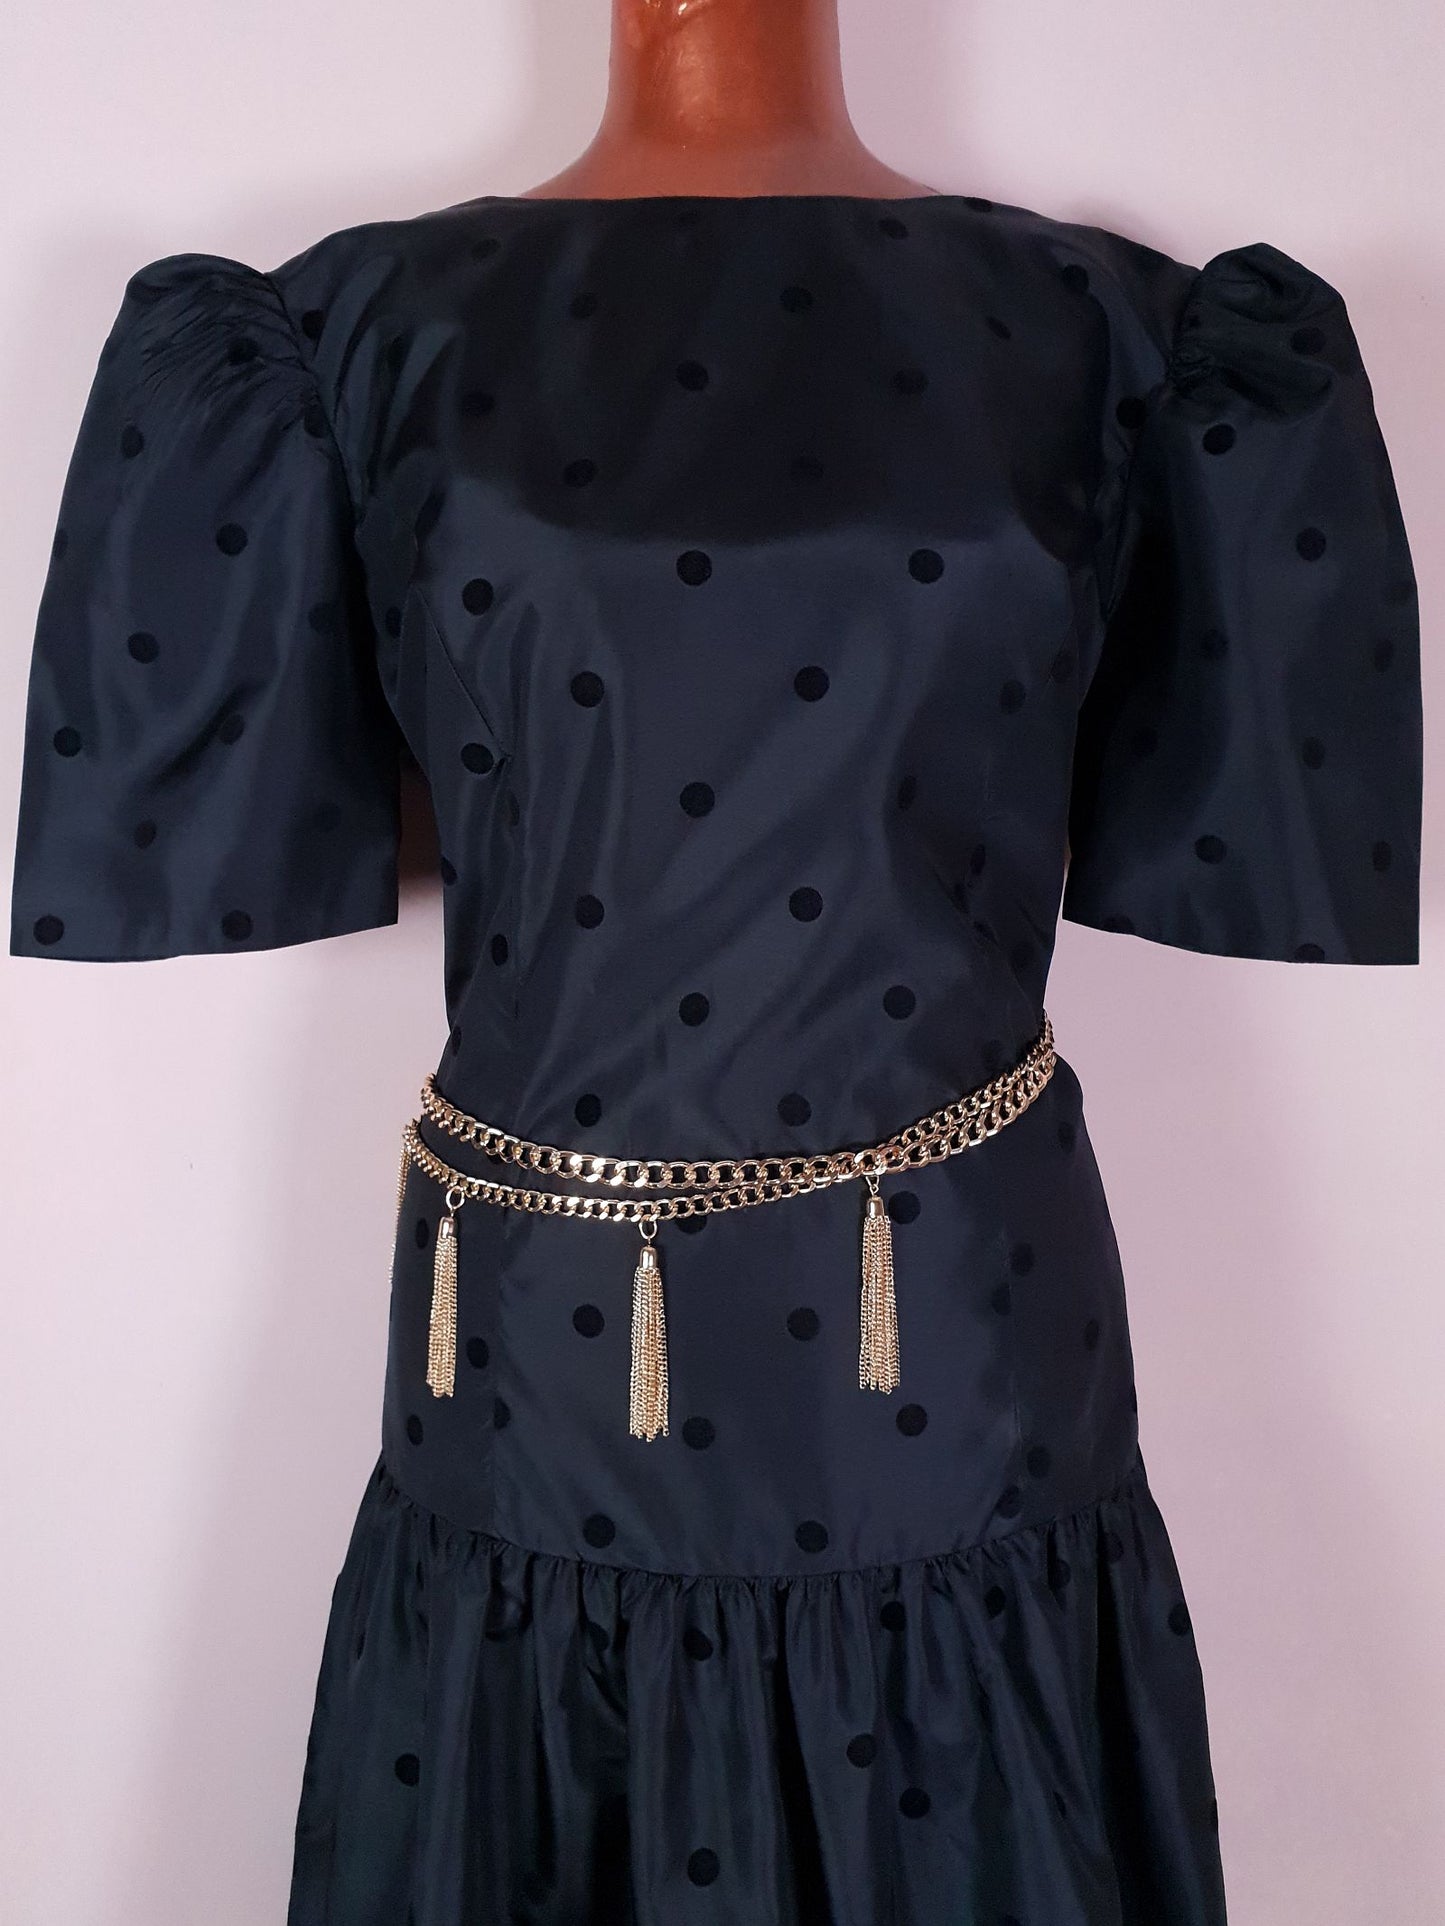 Classic 1980s Vintage Dotty Black Polka Dot Party Dress - Size 12/14